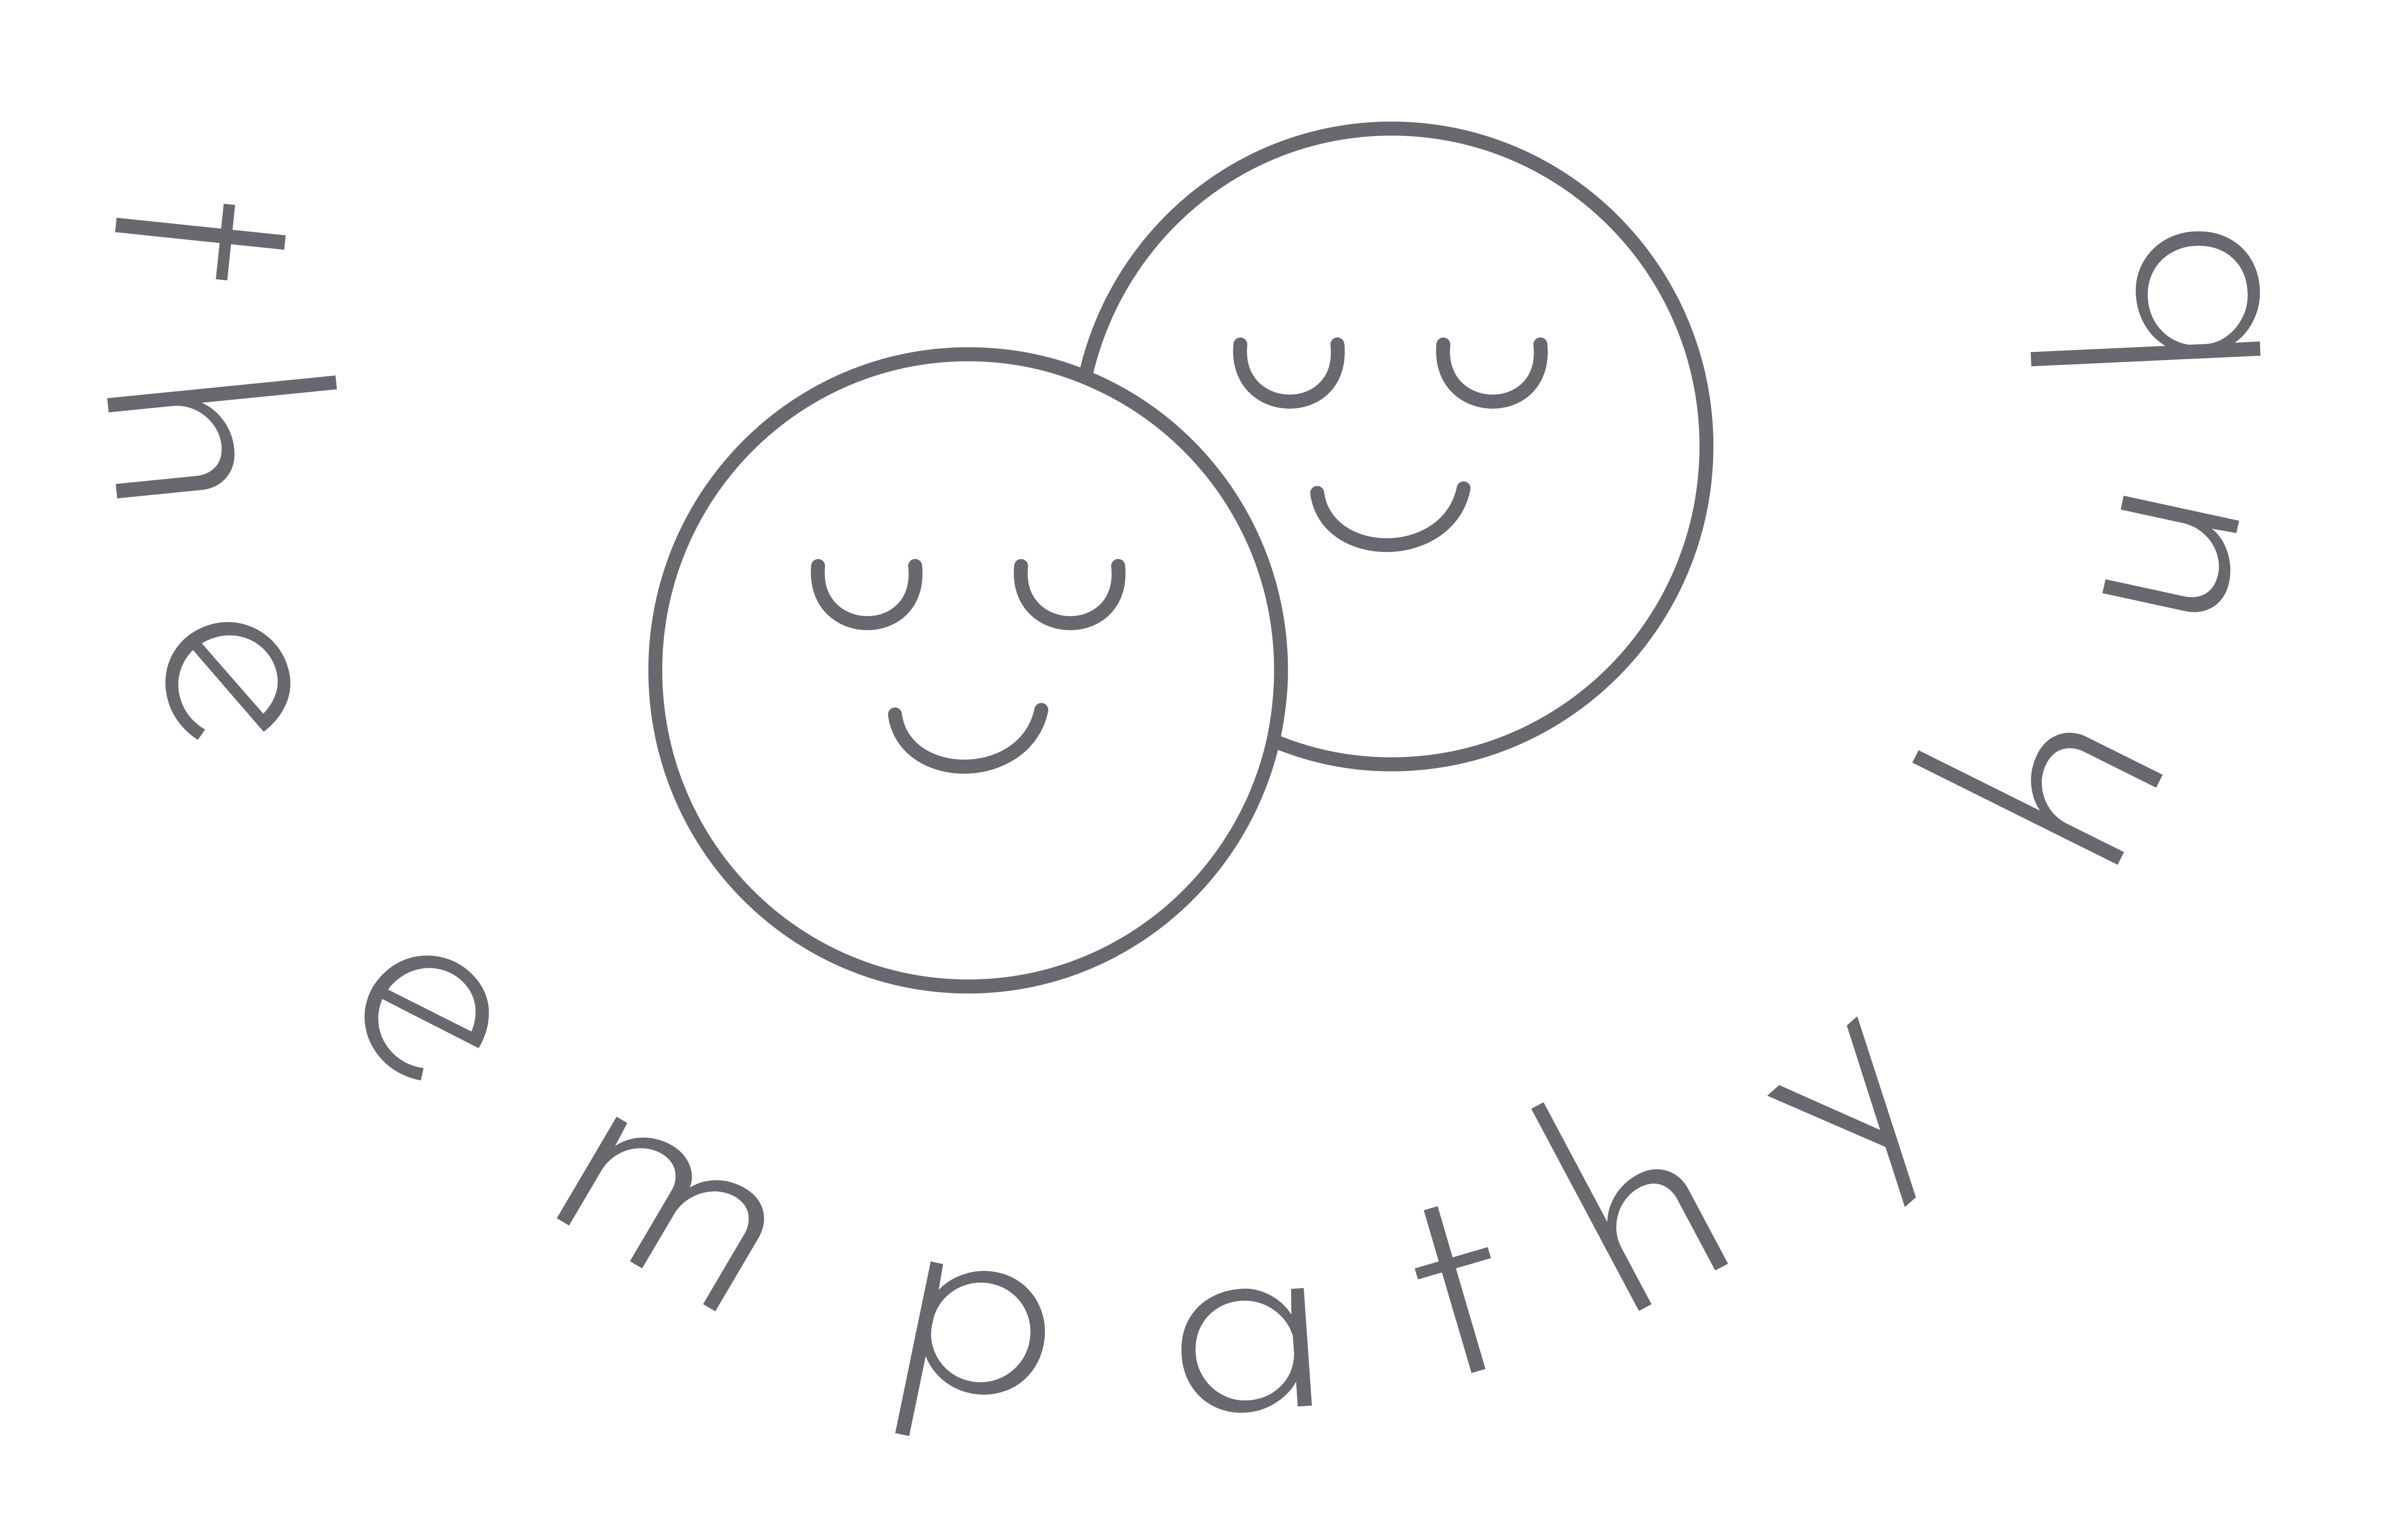 The Empathy Hub